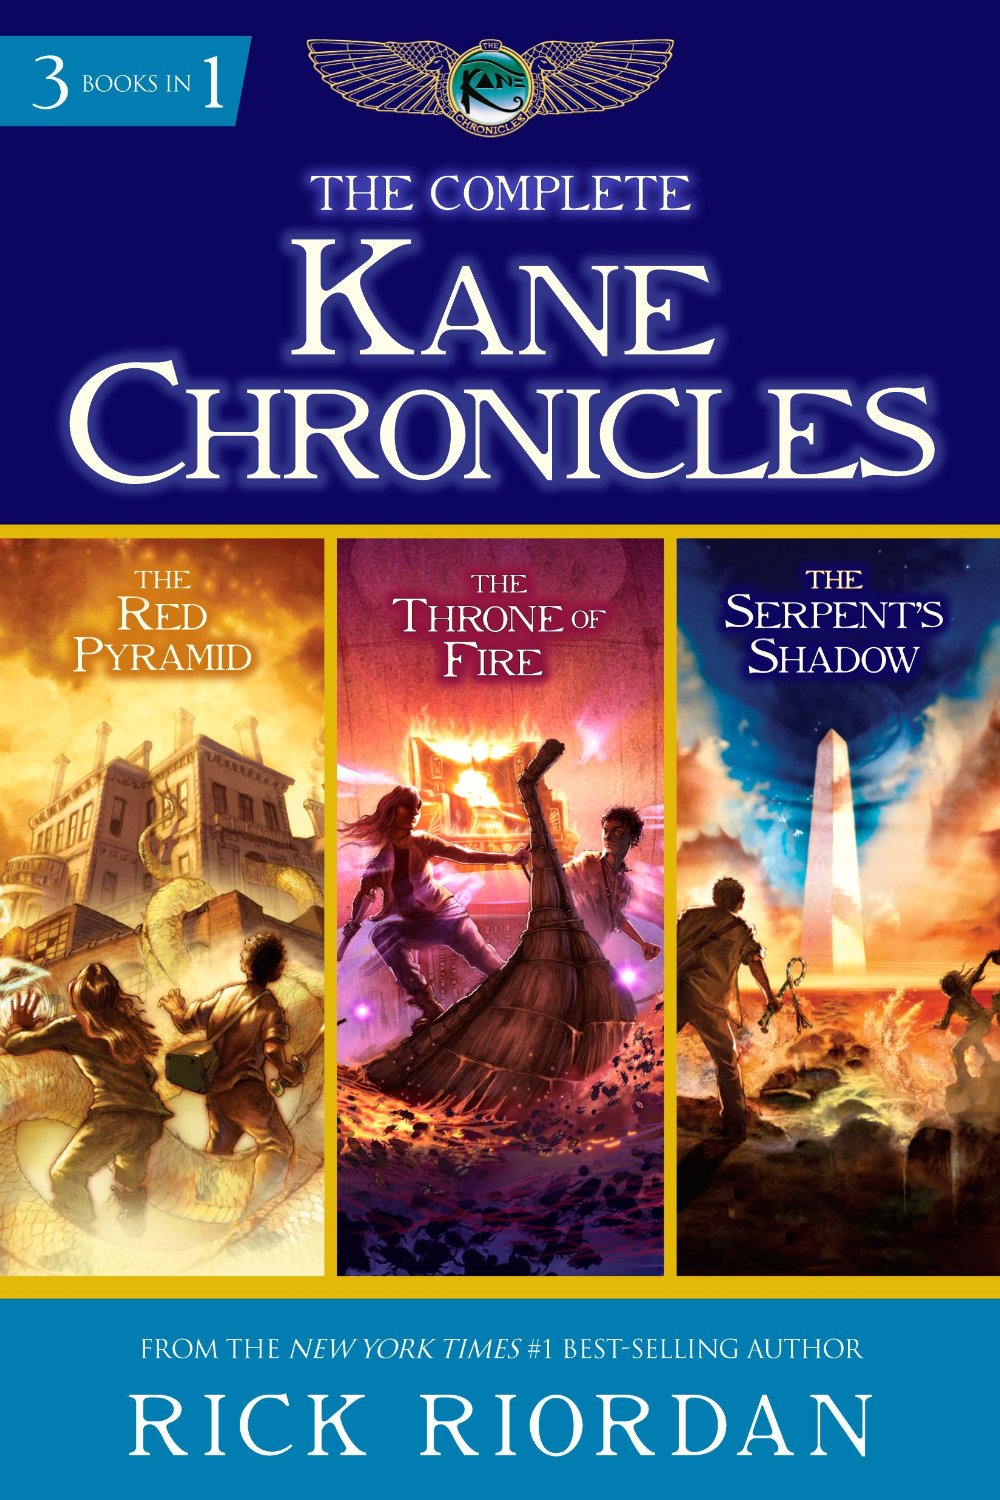 Other Kane Chronicles Books.